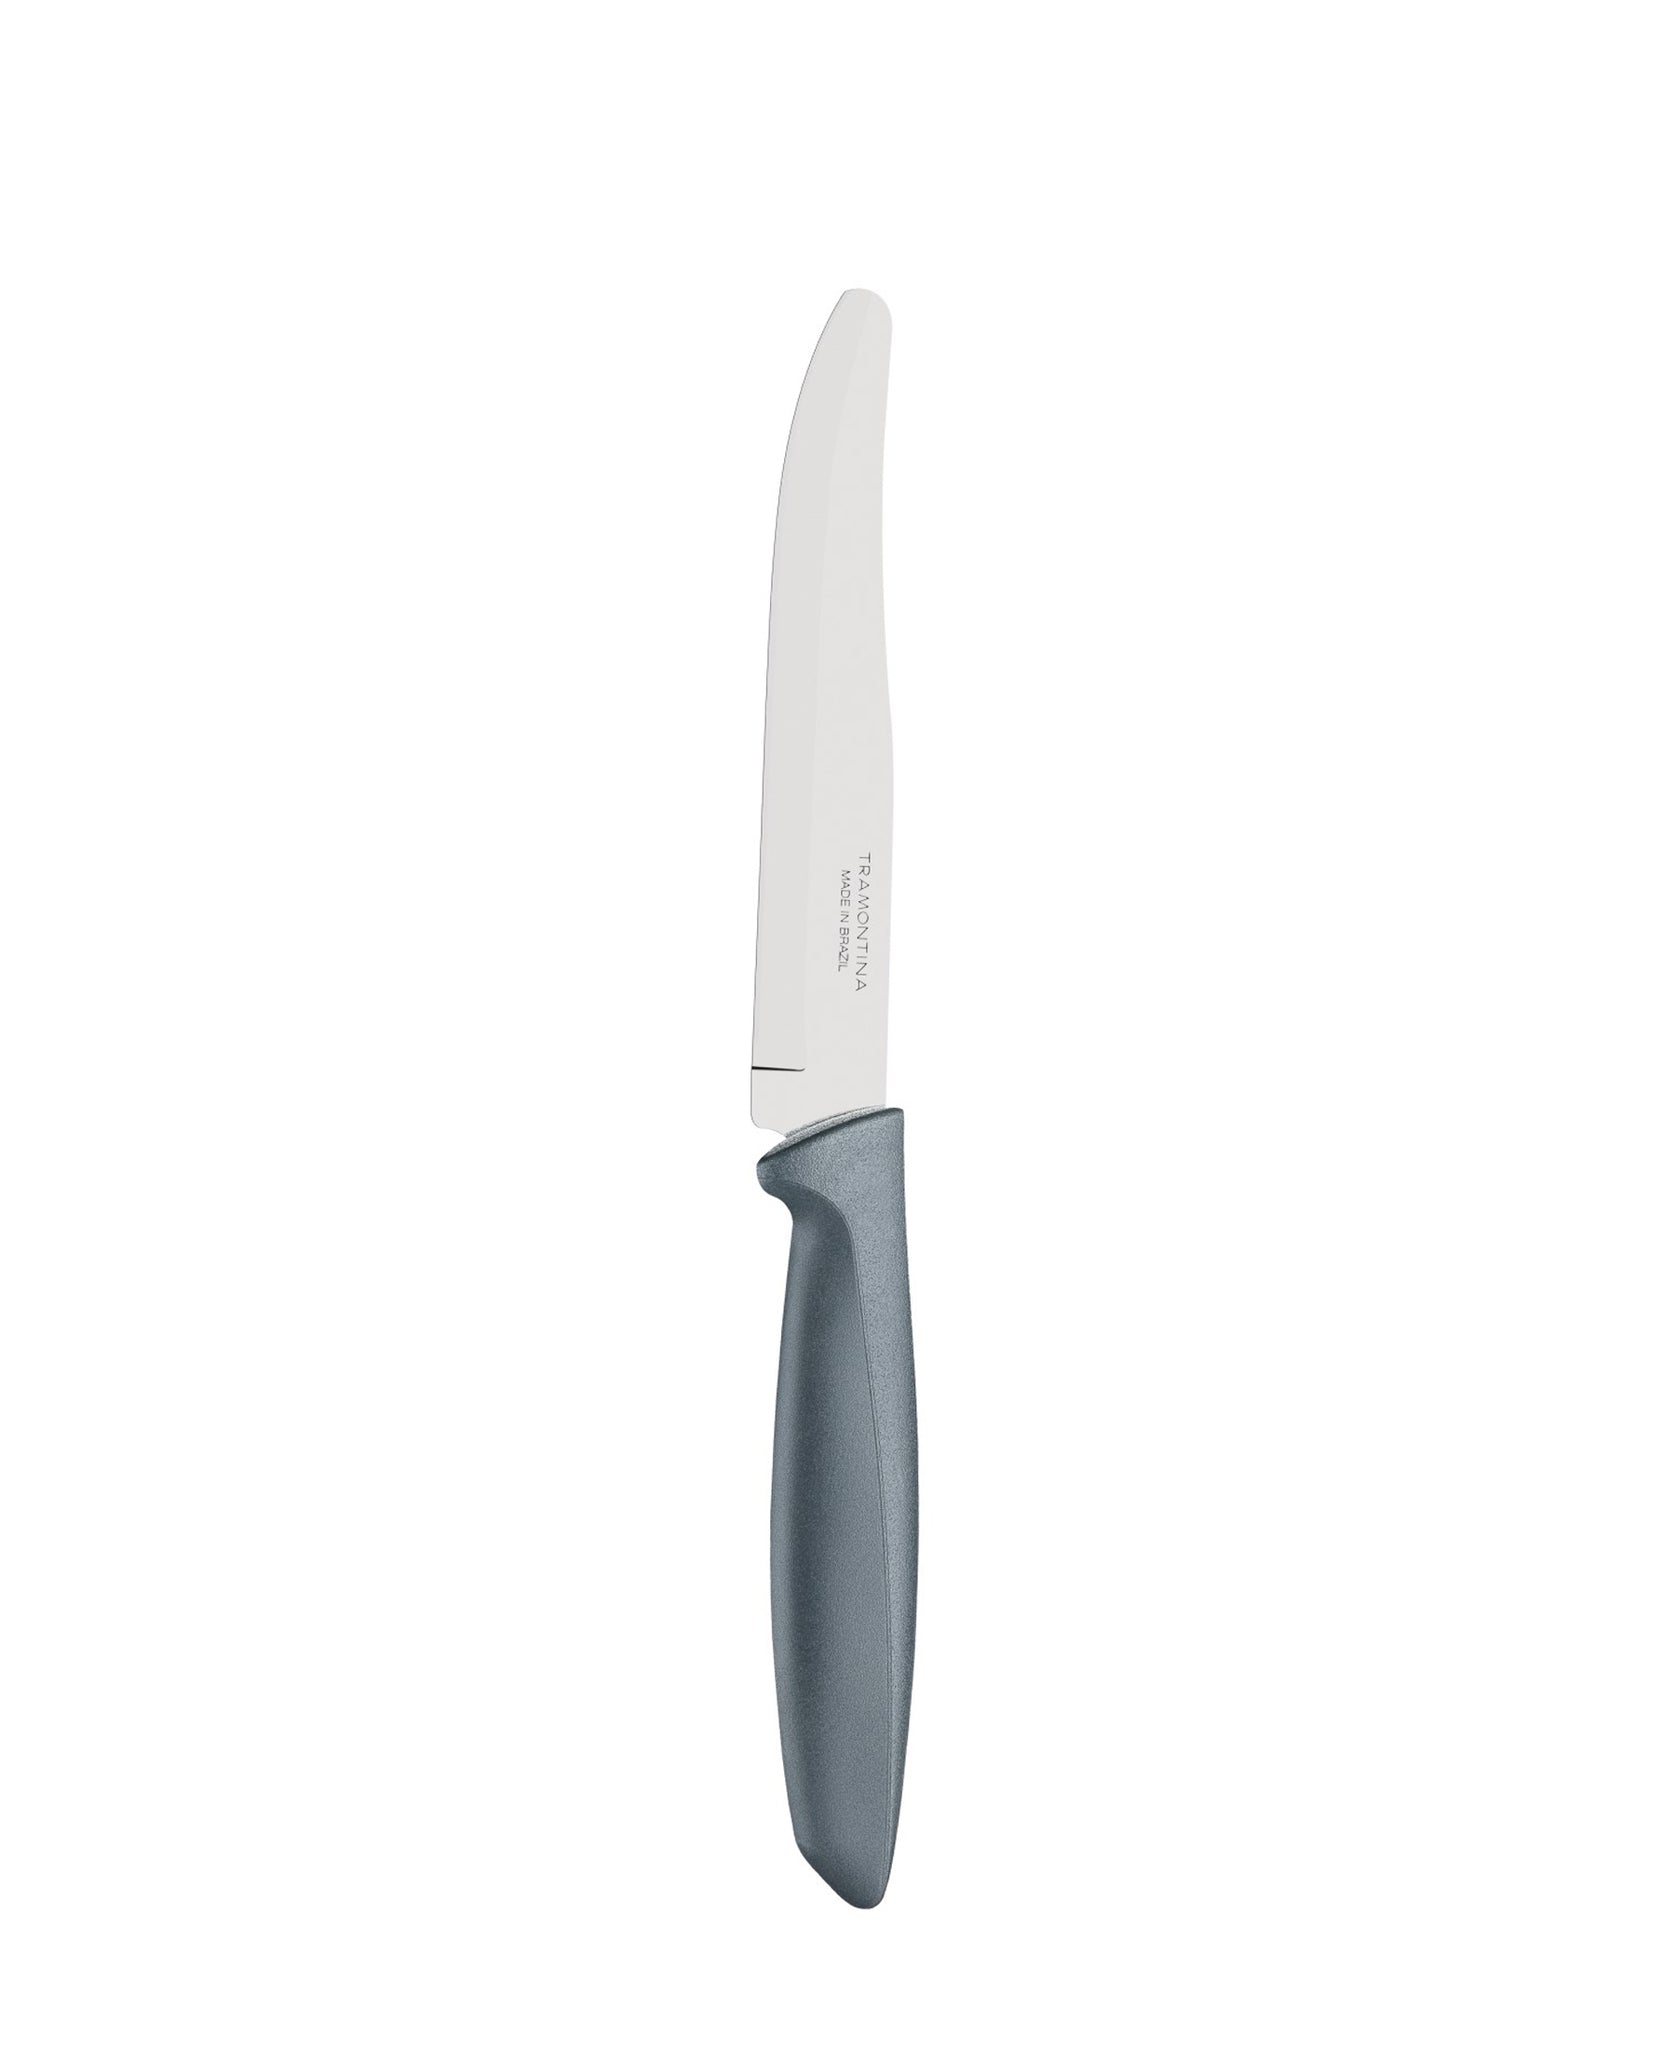 Tramontina Plenus fruit knife 13cm - Grey